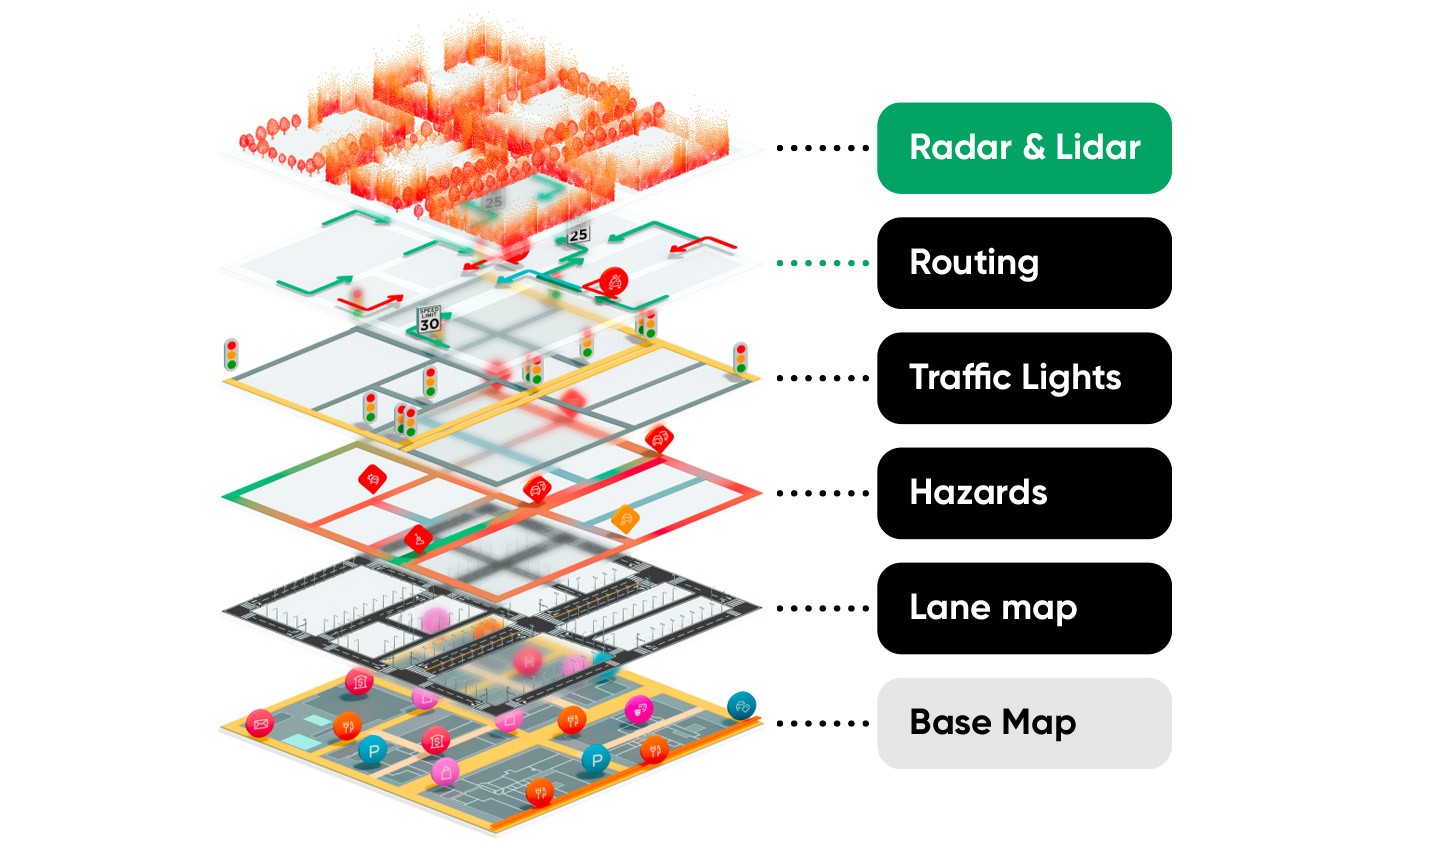 TomTom Orbis Map layers, including radar, lidar, routing, traffic lights, hazards, lane map, and base map.